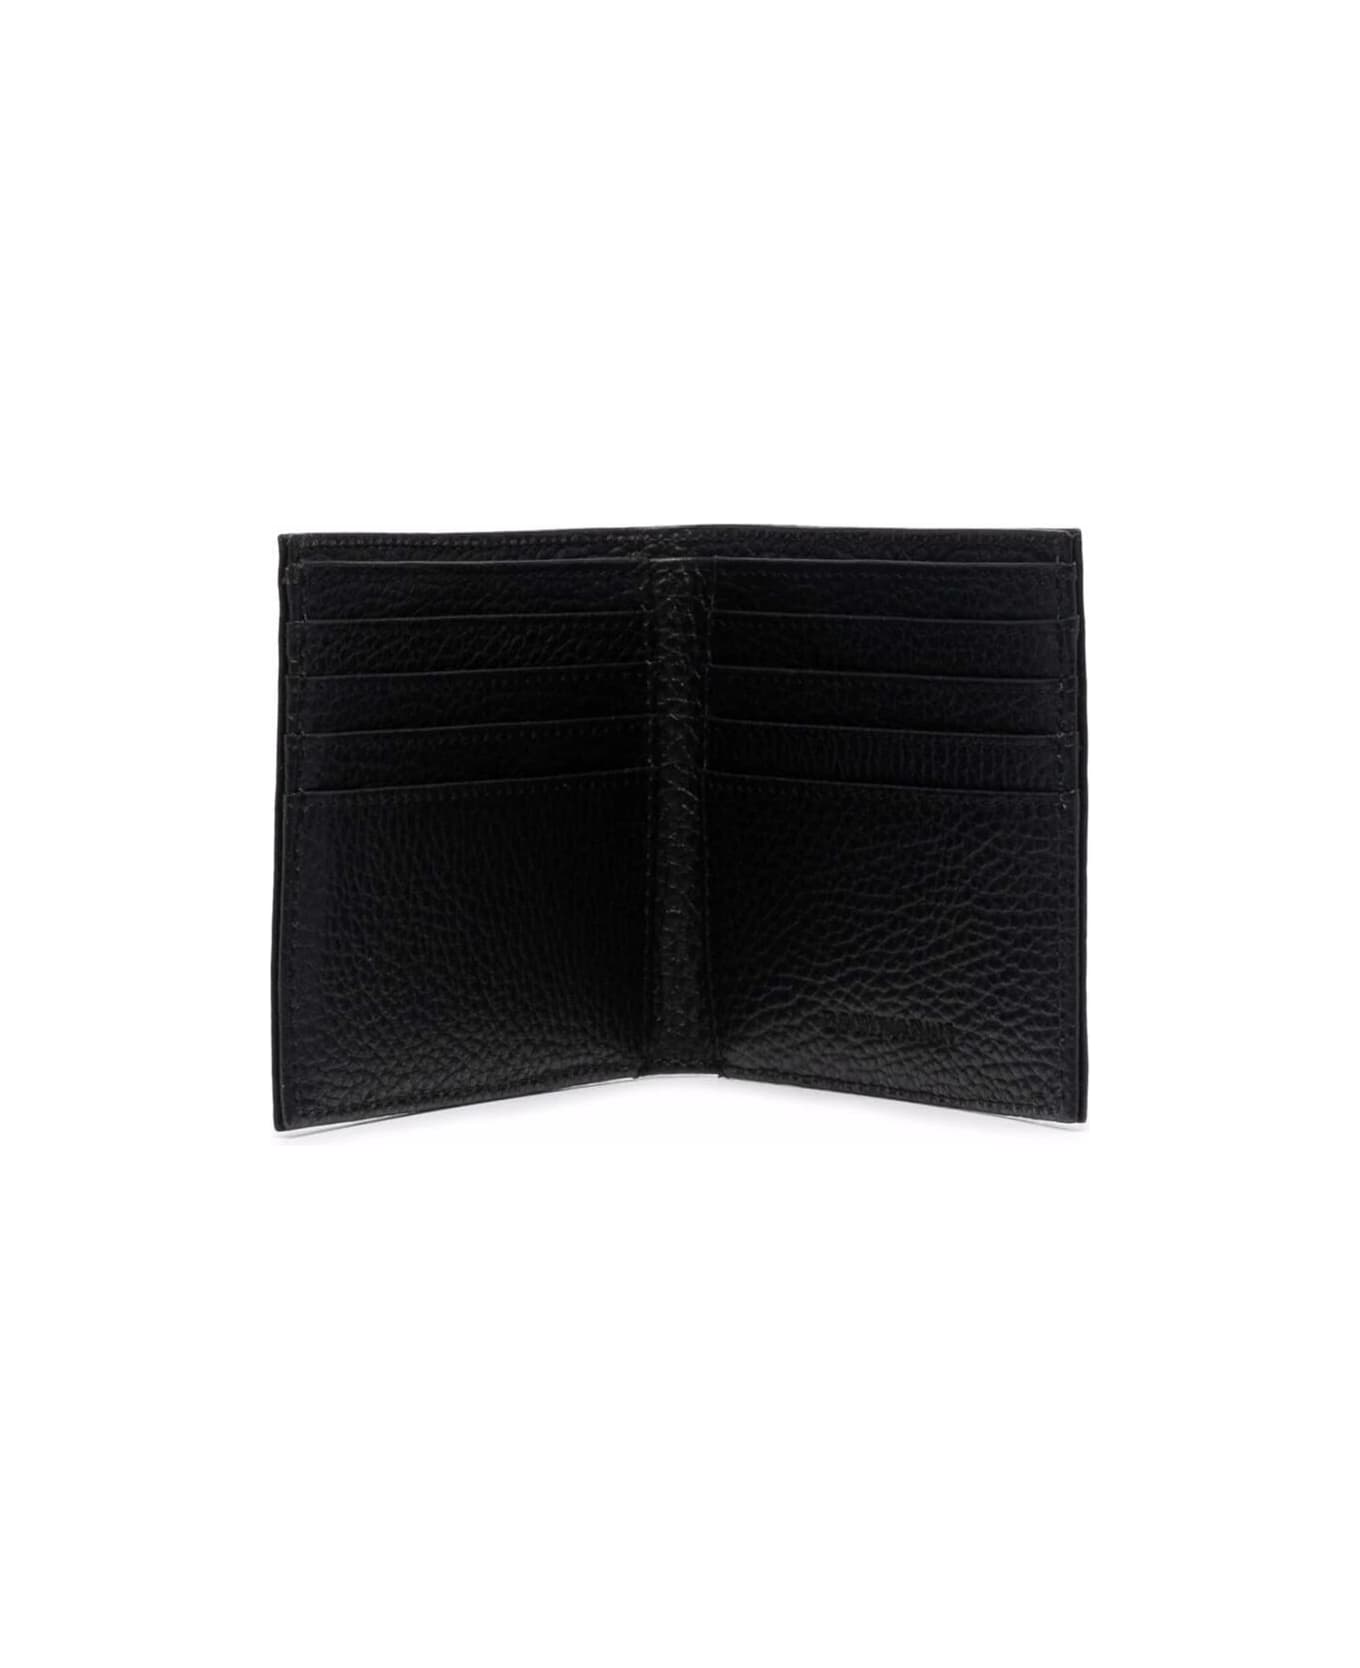 Emporio Armani Bi-fold Wallet - Lt Grey Black